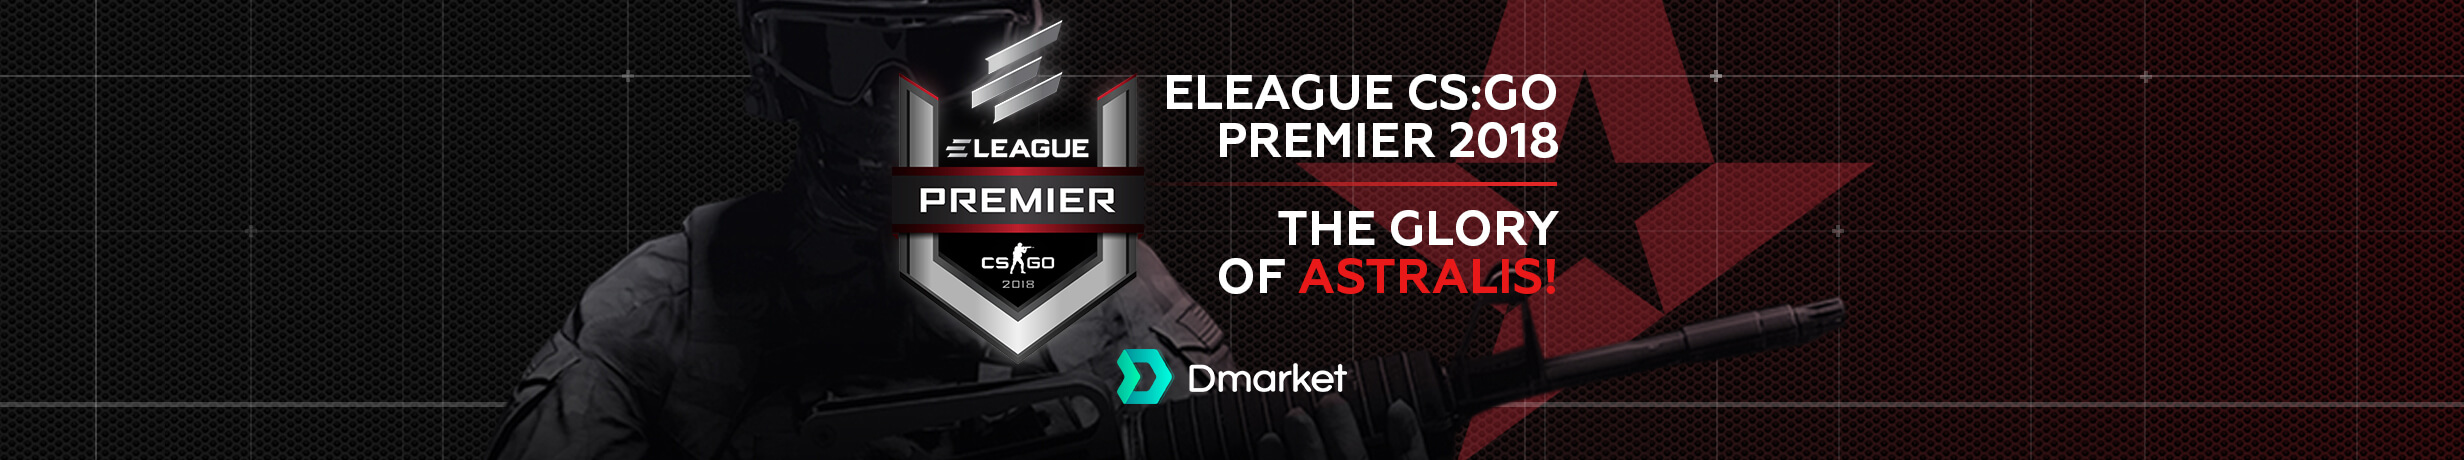 ELEAGUE CS:GO Premier 2018. The Glory of Astralis!